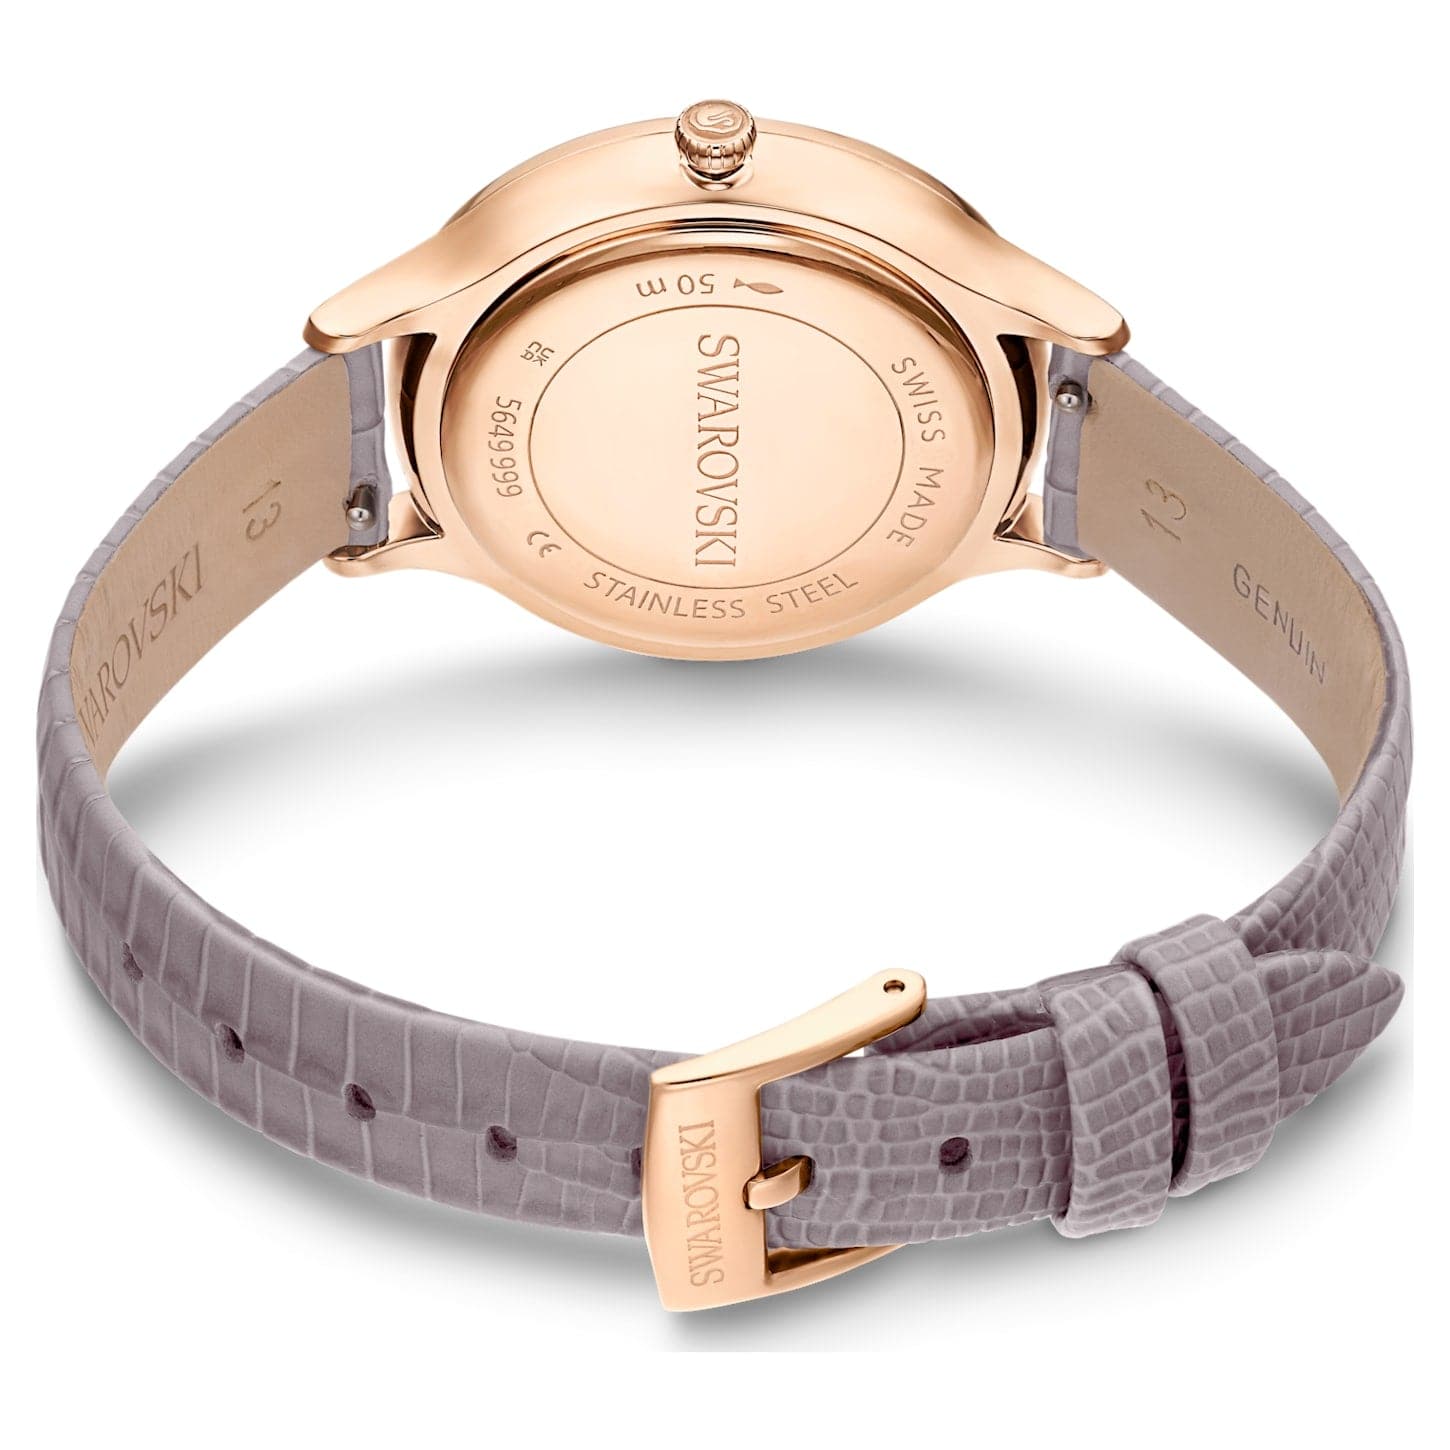 Octea Nova watch Swiss Made, Leather strap, Beige, Rose gold-tone finish - Kamal Watch Company